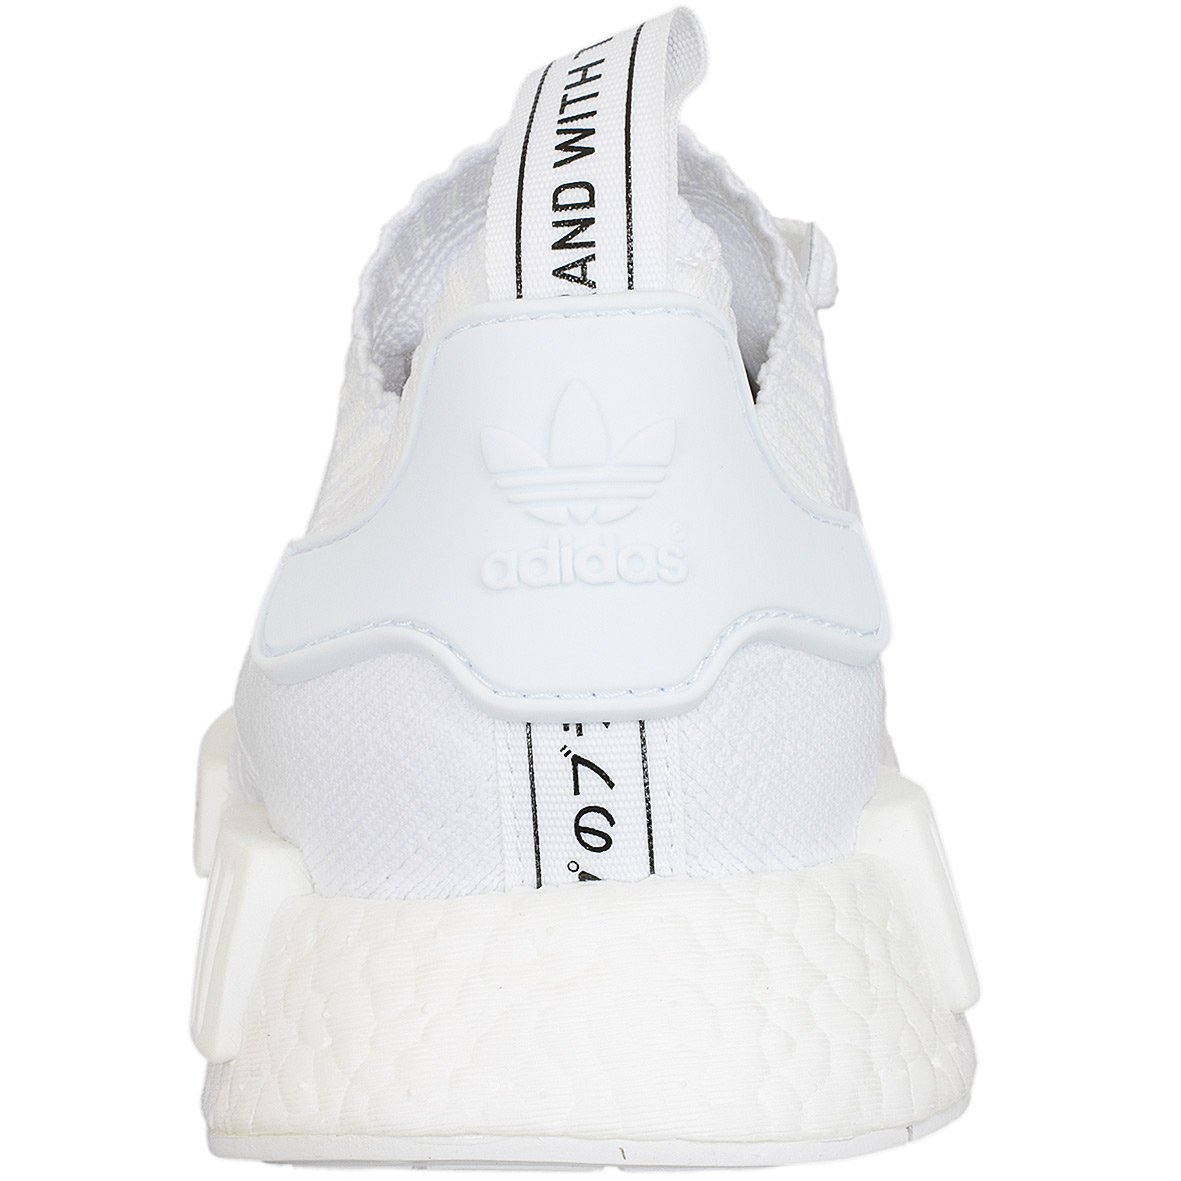 ☆ Adidas Originals Sneaker NMD R1 Primeknit - hier bestellen!